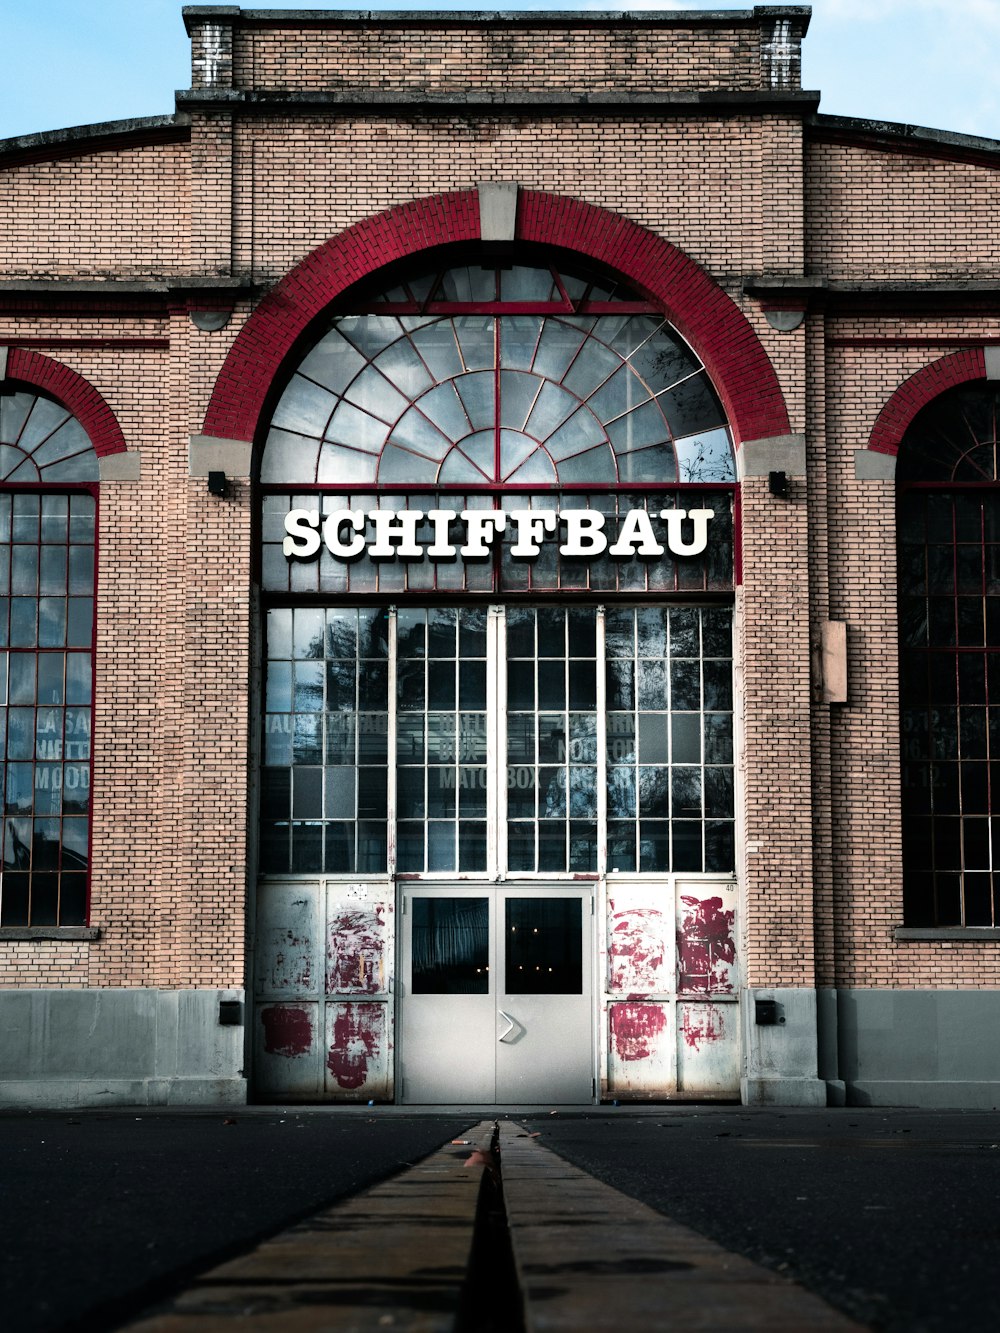 Schiffbau building